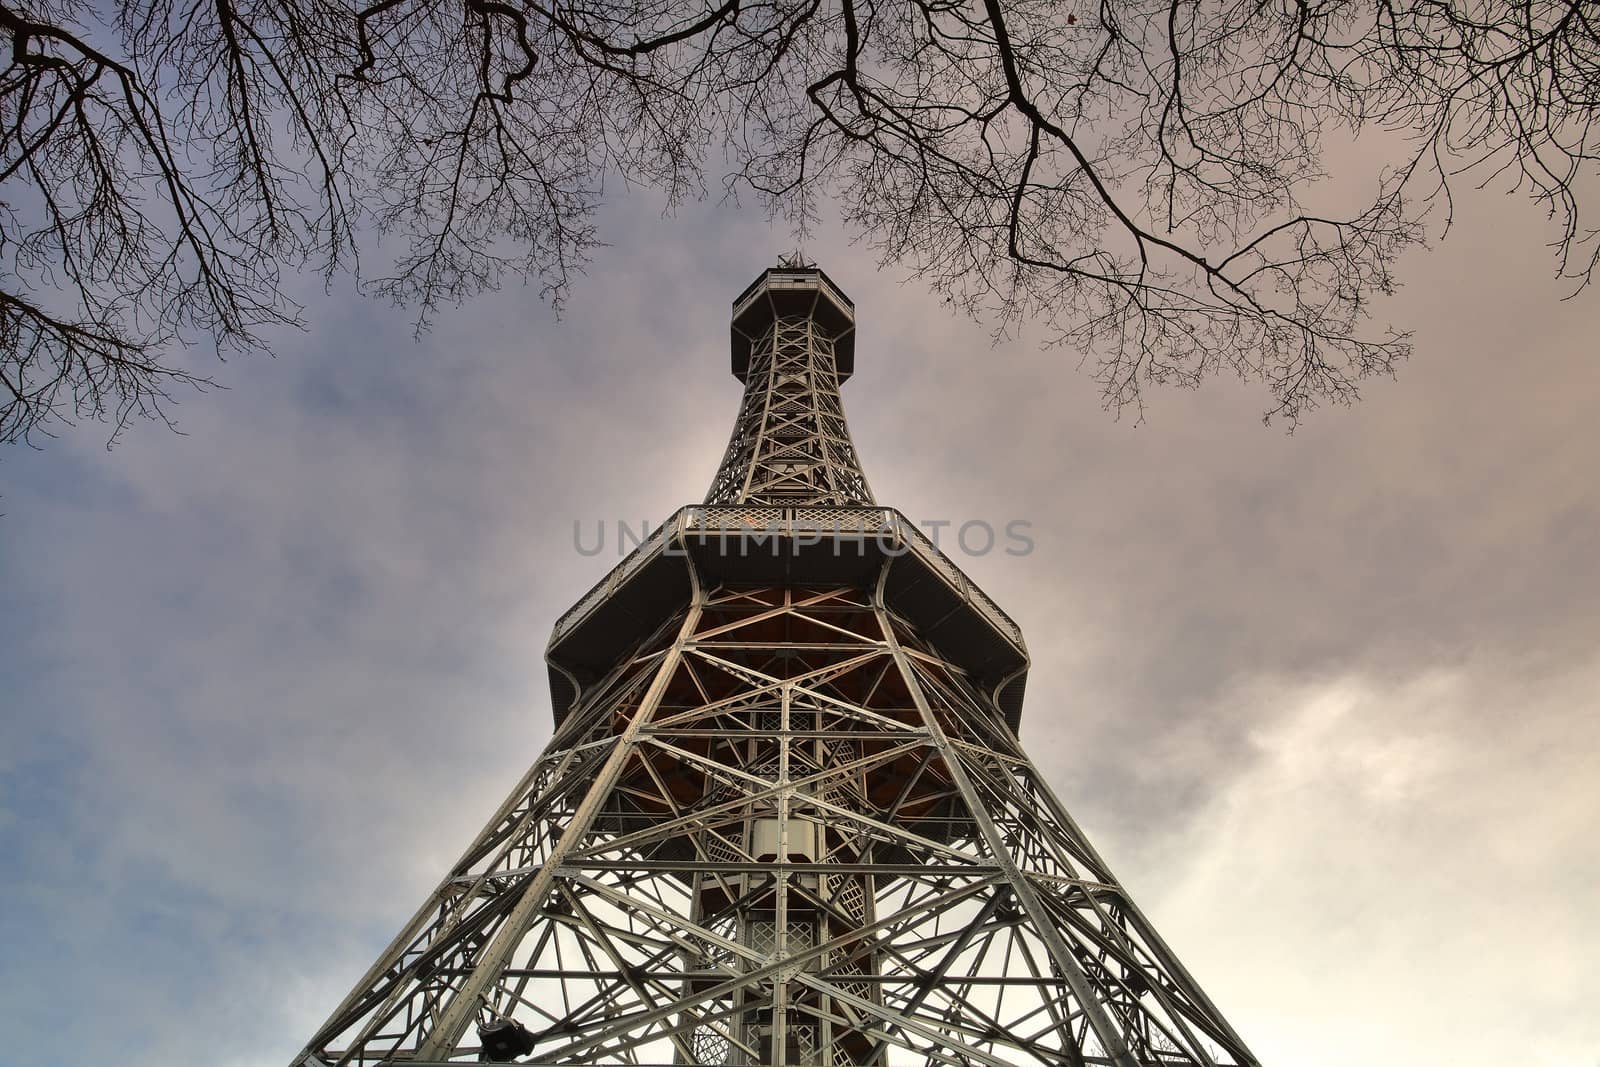 Prague Lookout Tower (Petrin) similar to Eiffel Tower